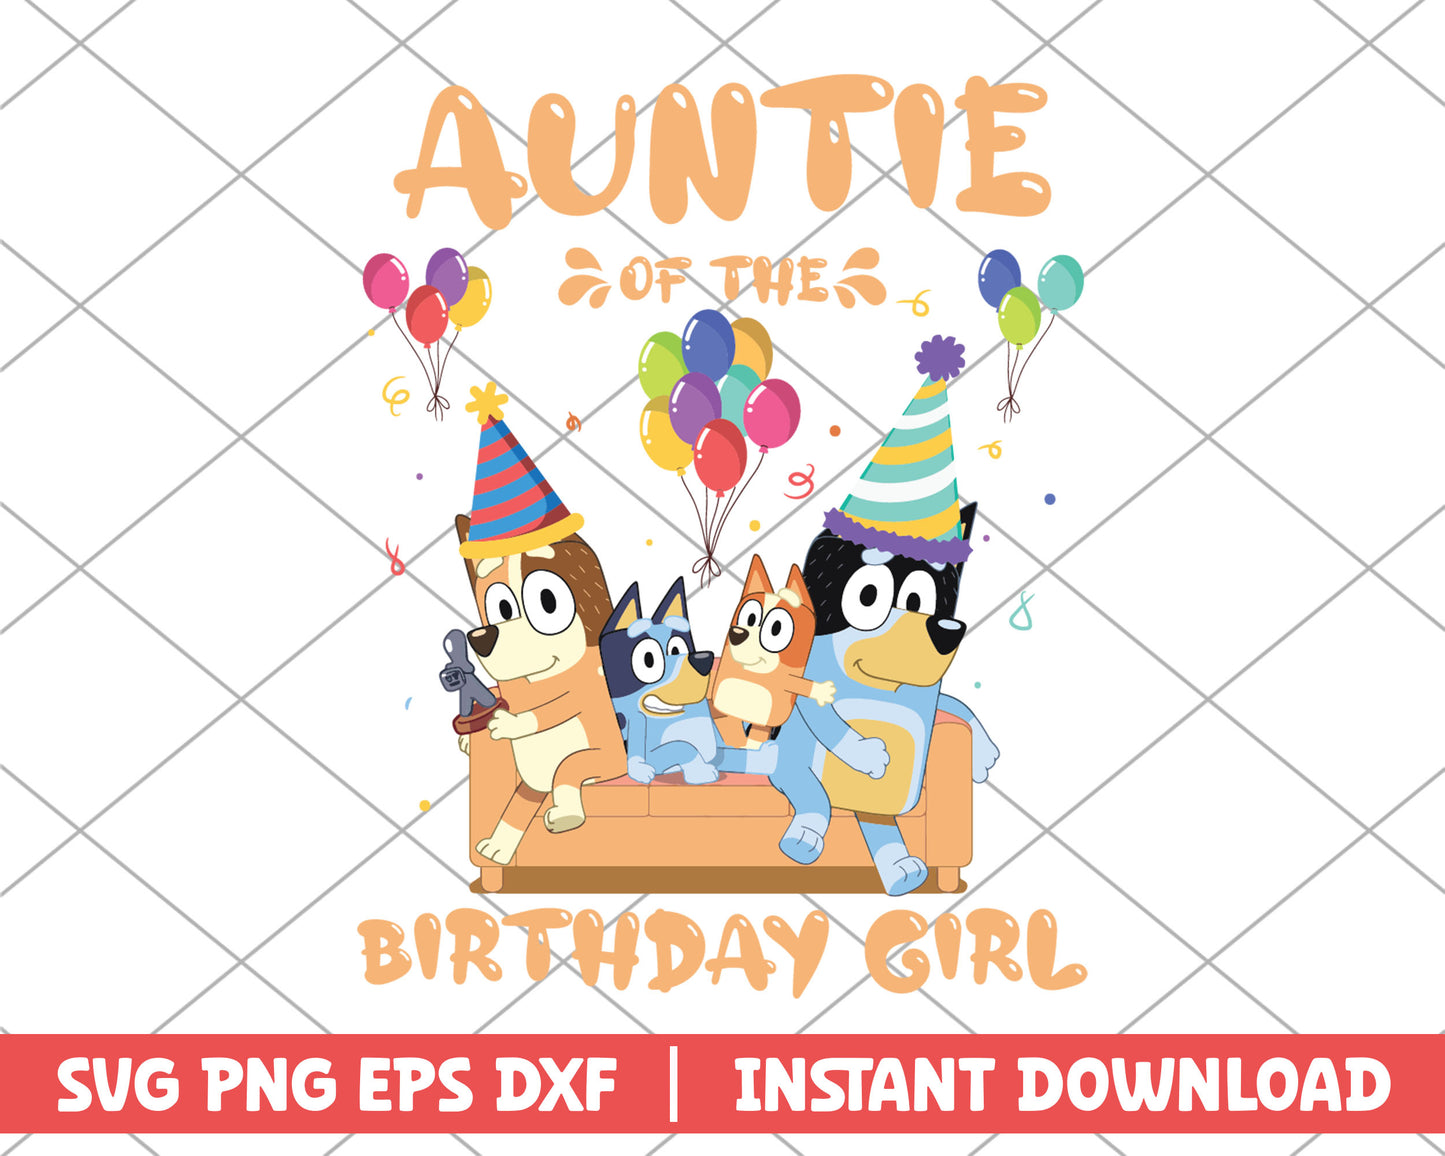 Auntie of the birthday girl cartoon svg 